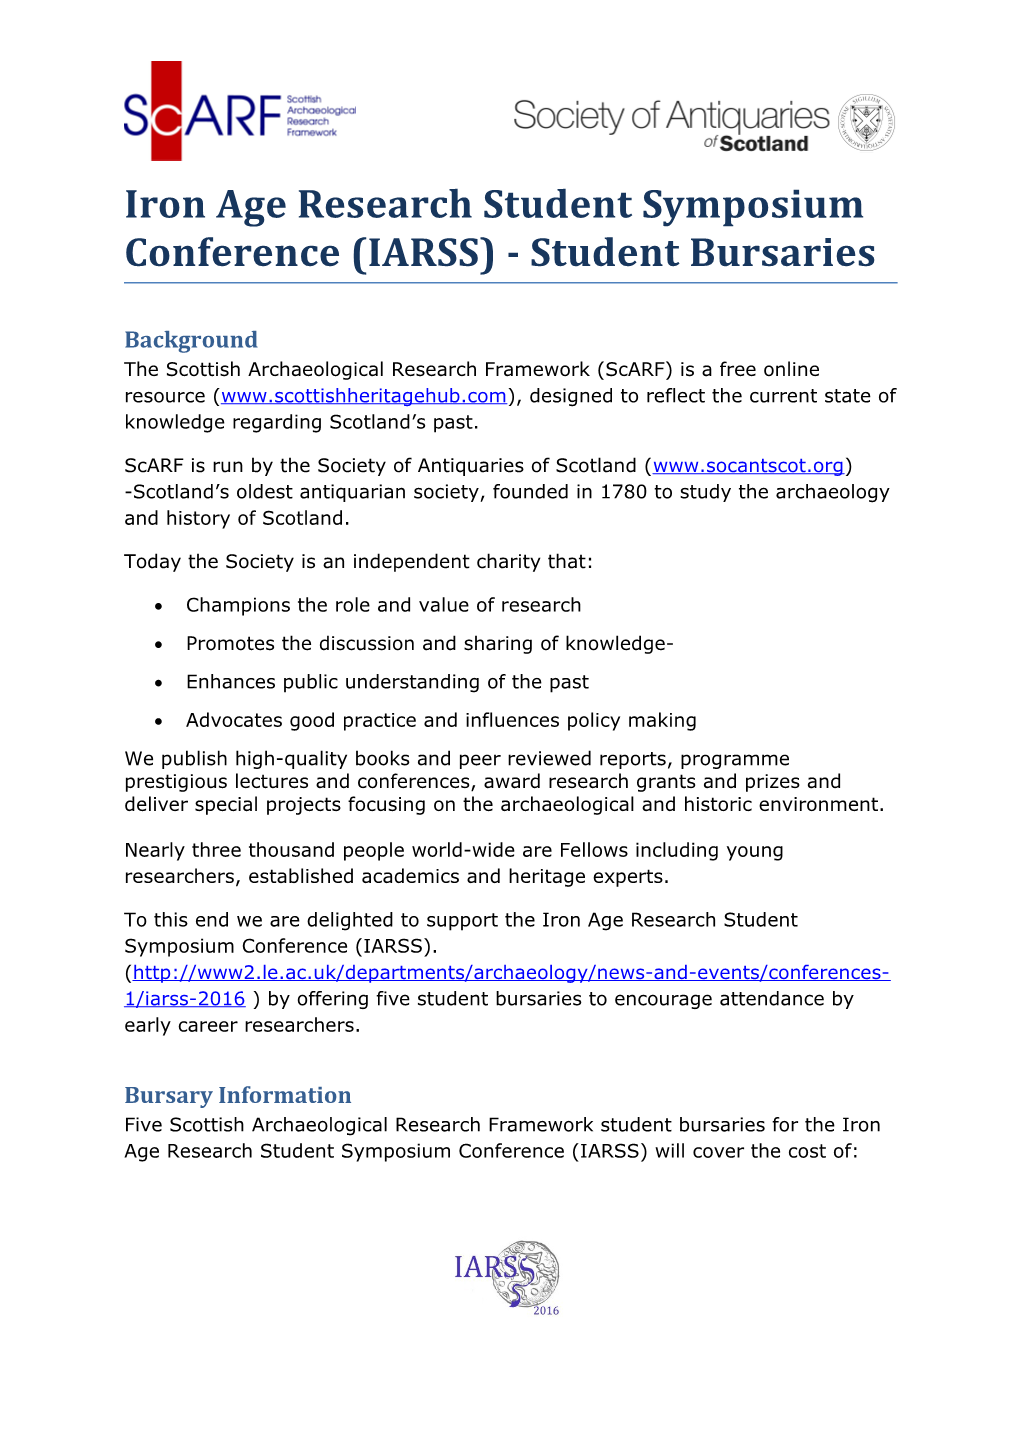 Iron Age Research Student Symposium Conference (IARSS) - Student Bursaries